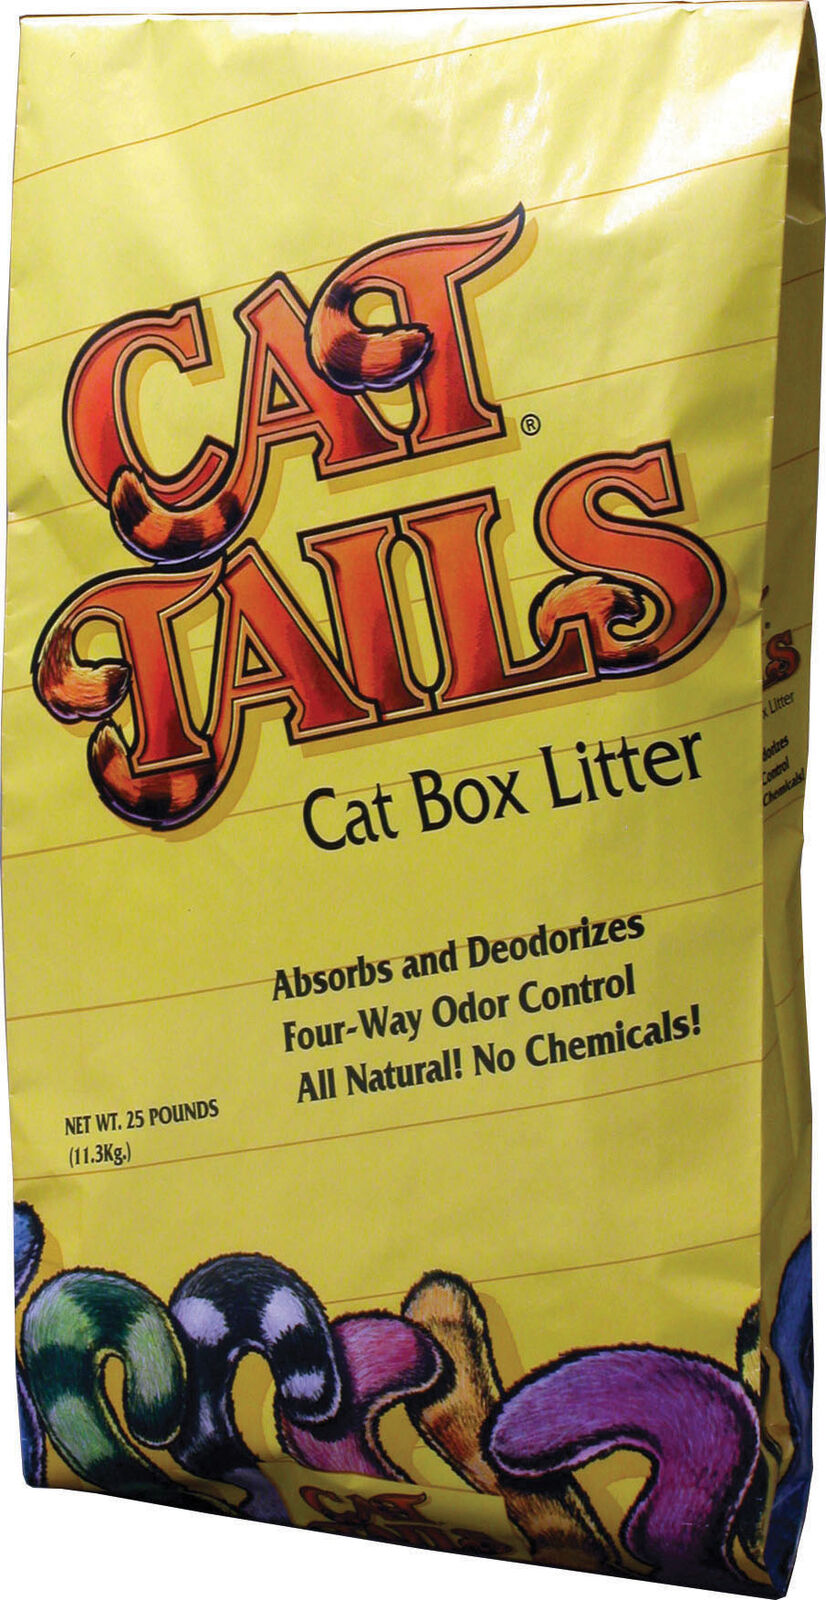 Cat Tails Litter